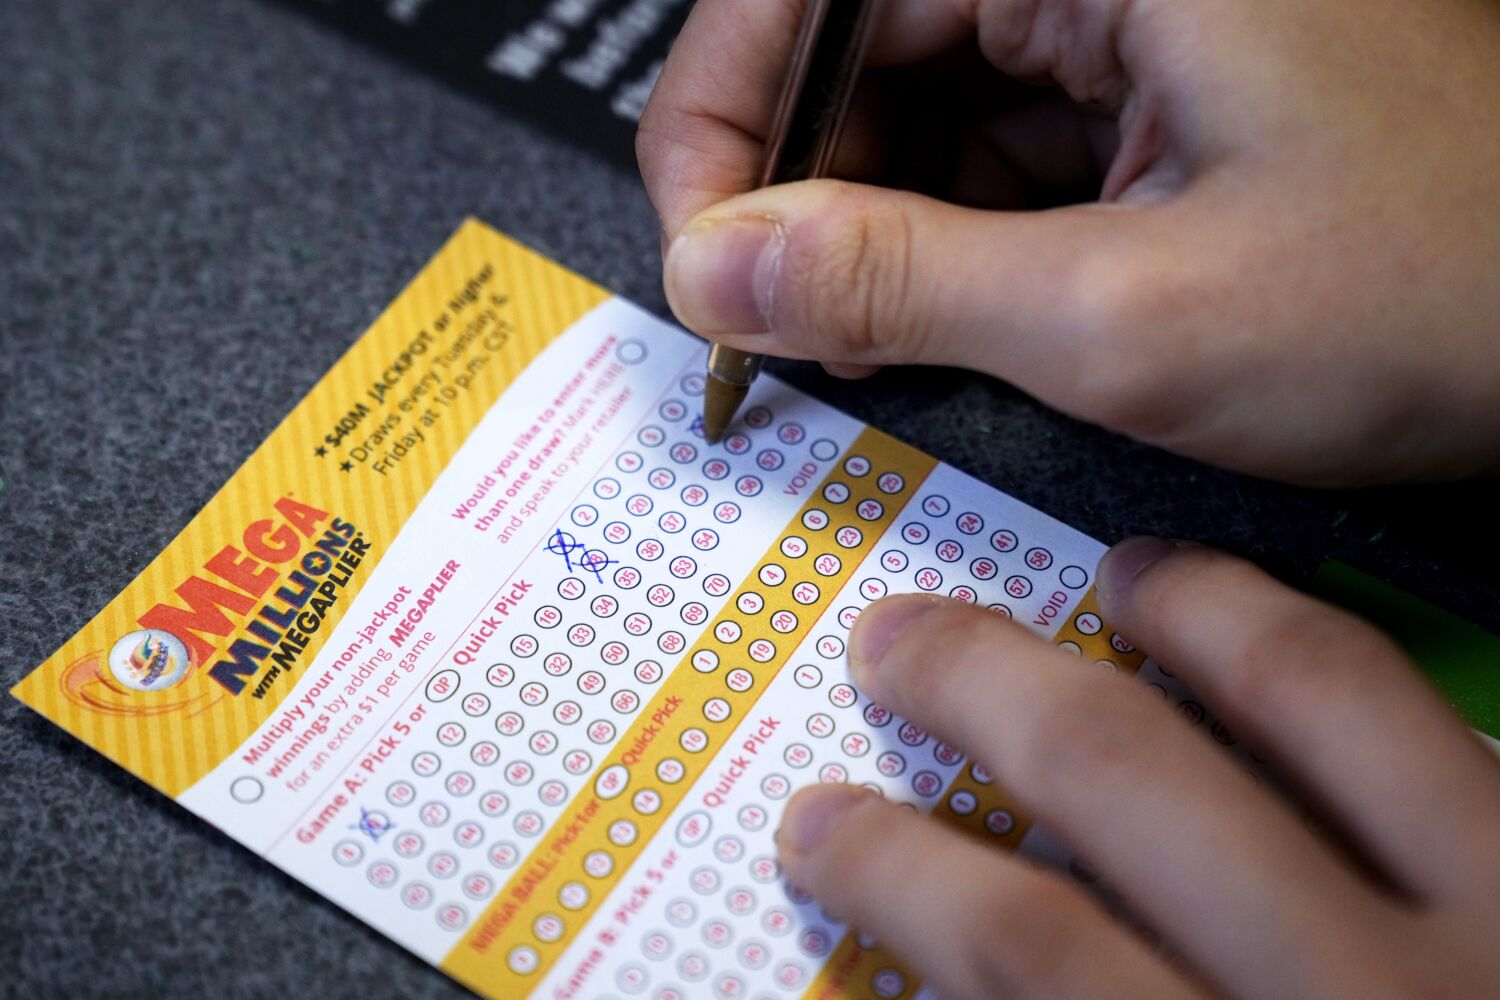 Friday Mega Million lottery jackpot approaches $1-billion mark